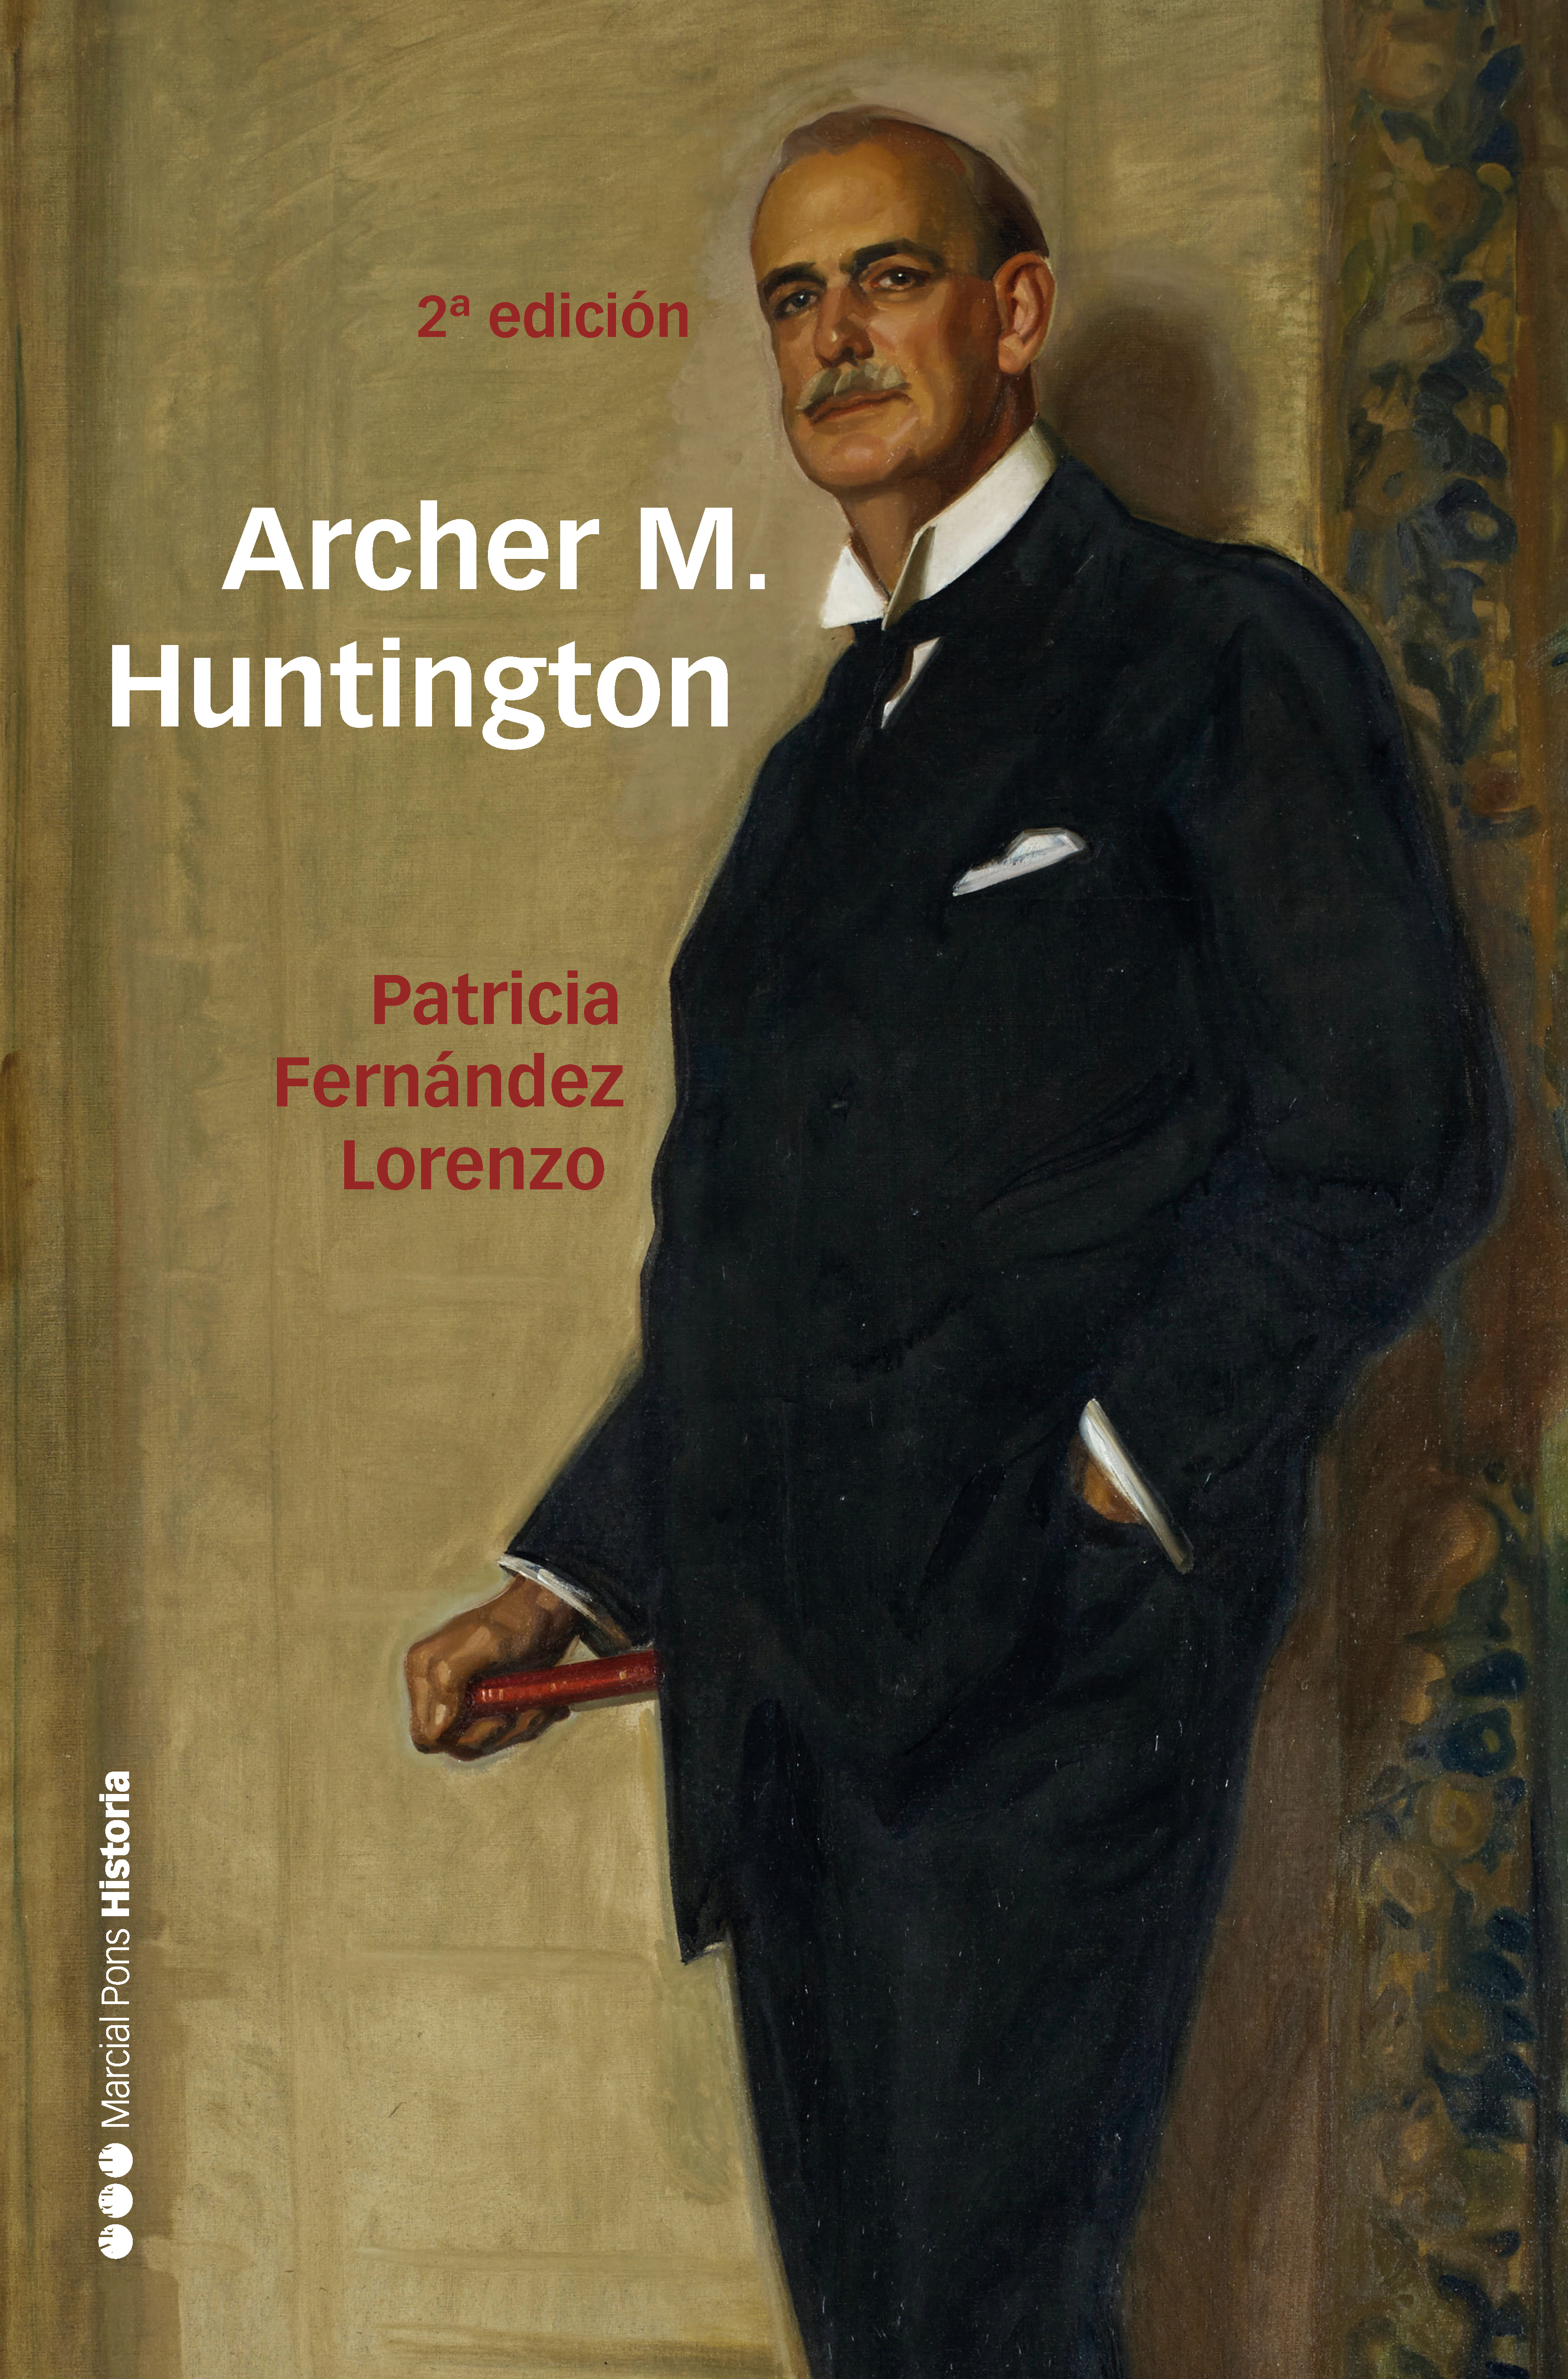 Archer M. Huntington